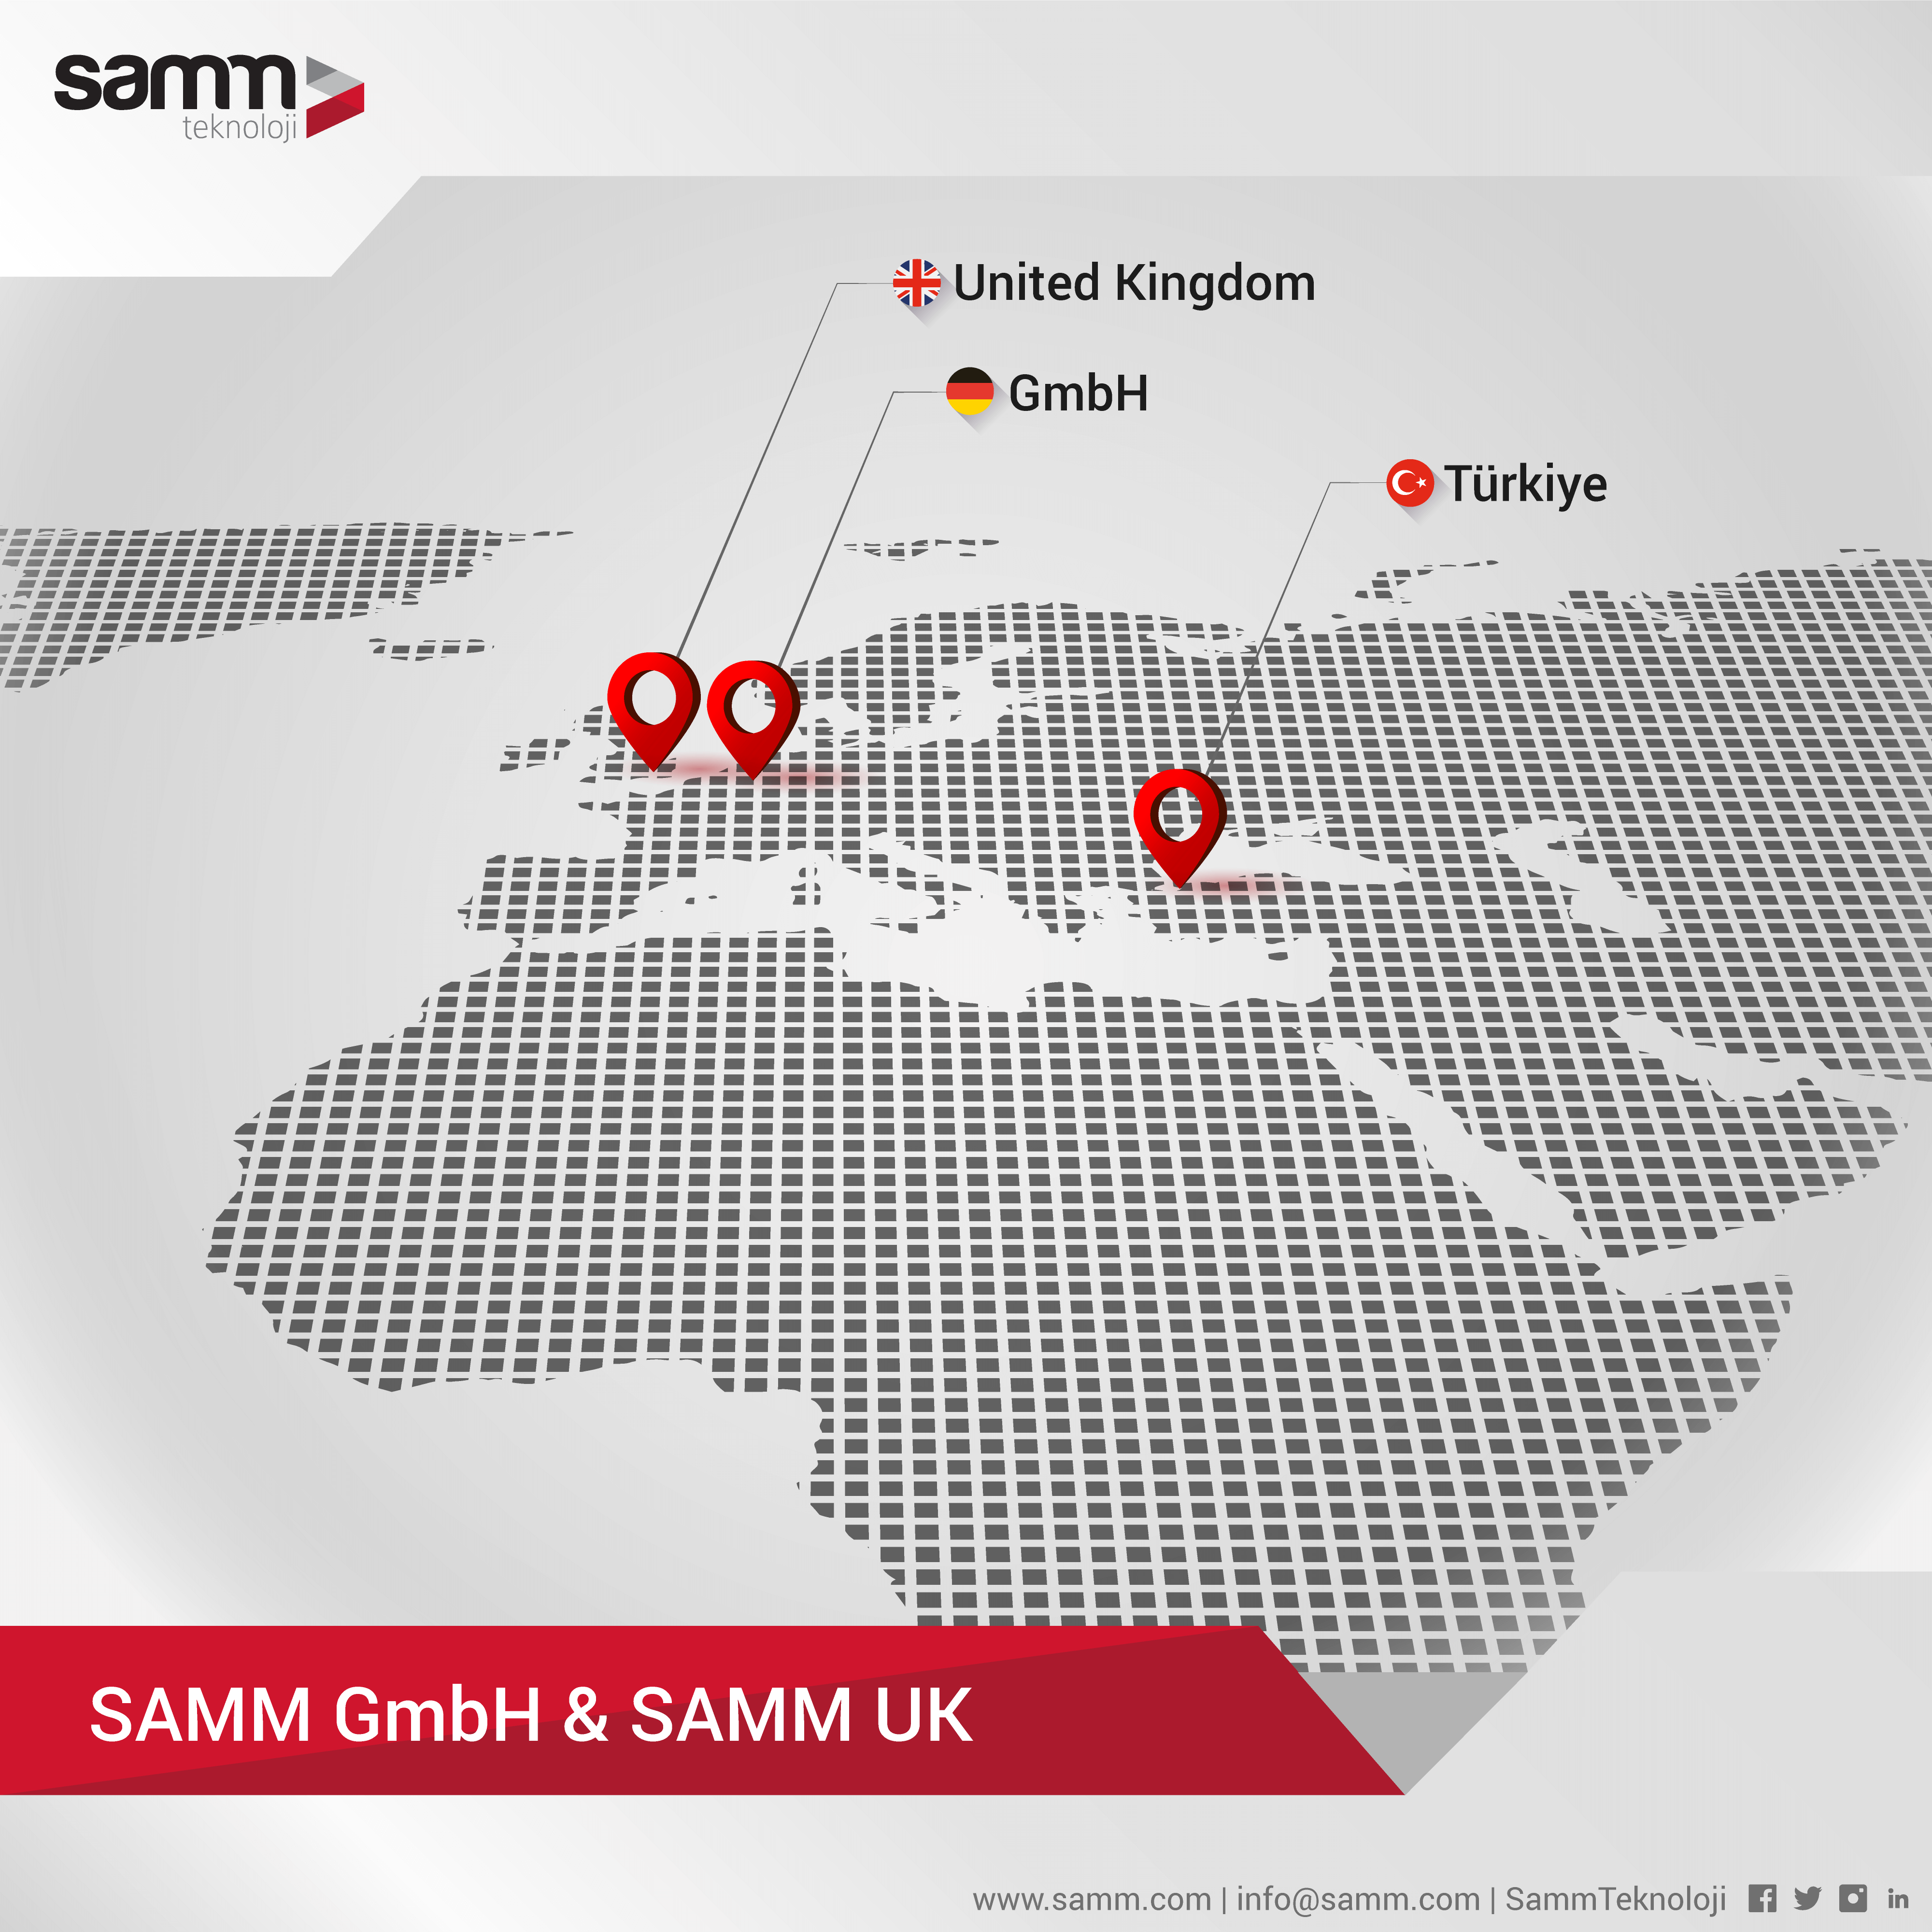 New Global Branches, SAMM UK and SAMM GmbH, Opened